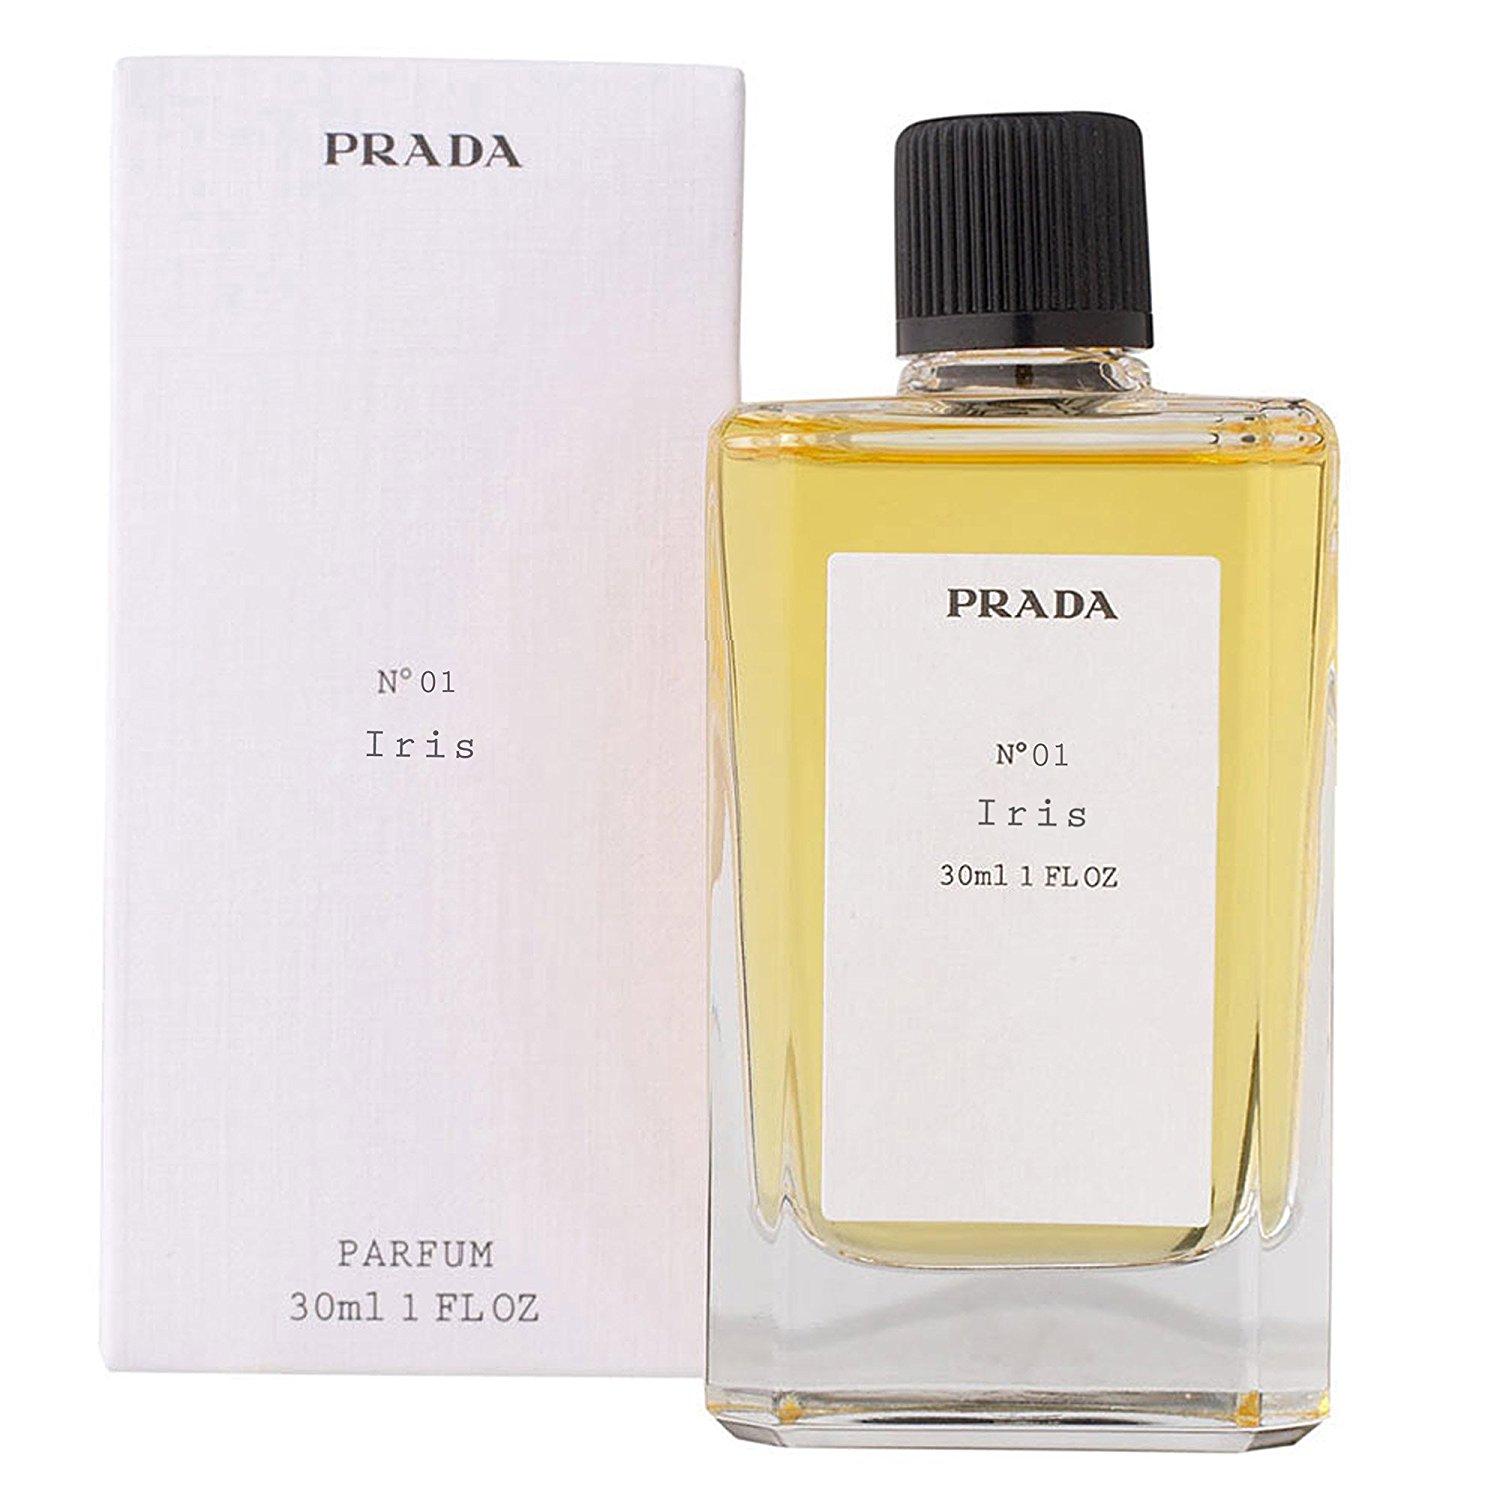 Prada Exclusive Collection No.1 "Iris" 30ml, Parfum (W)